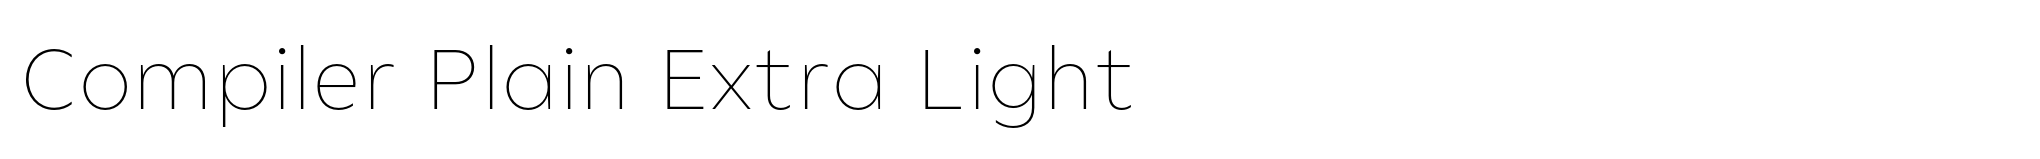 Compiler Plain Extra Light image